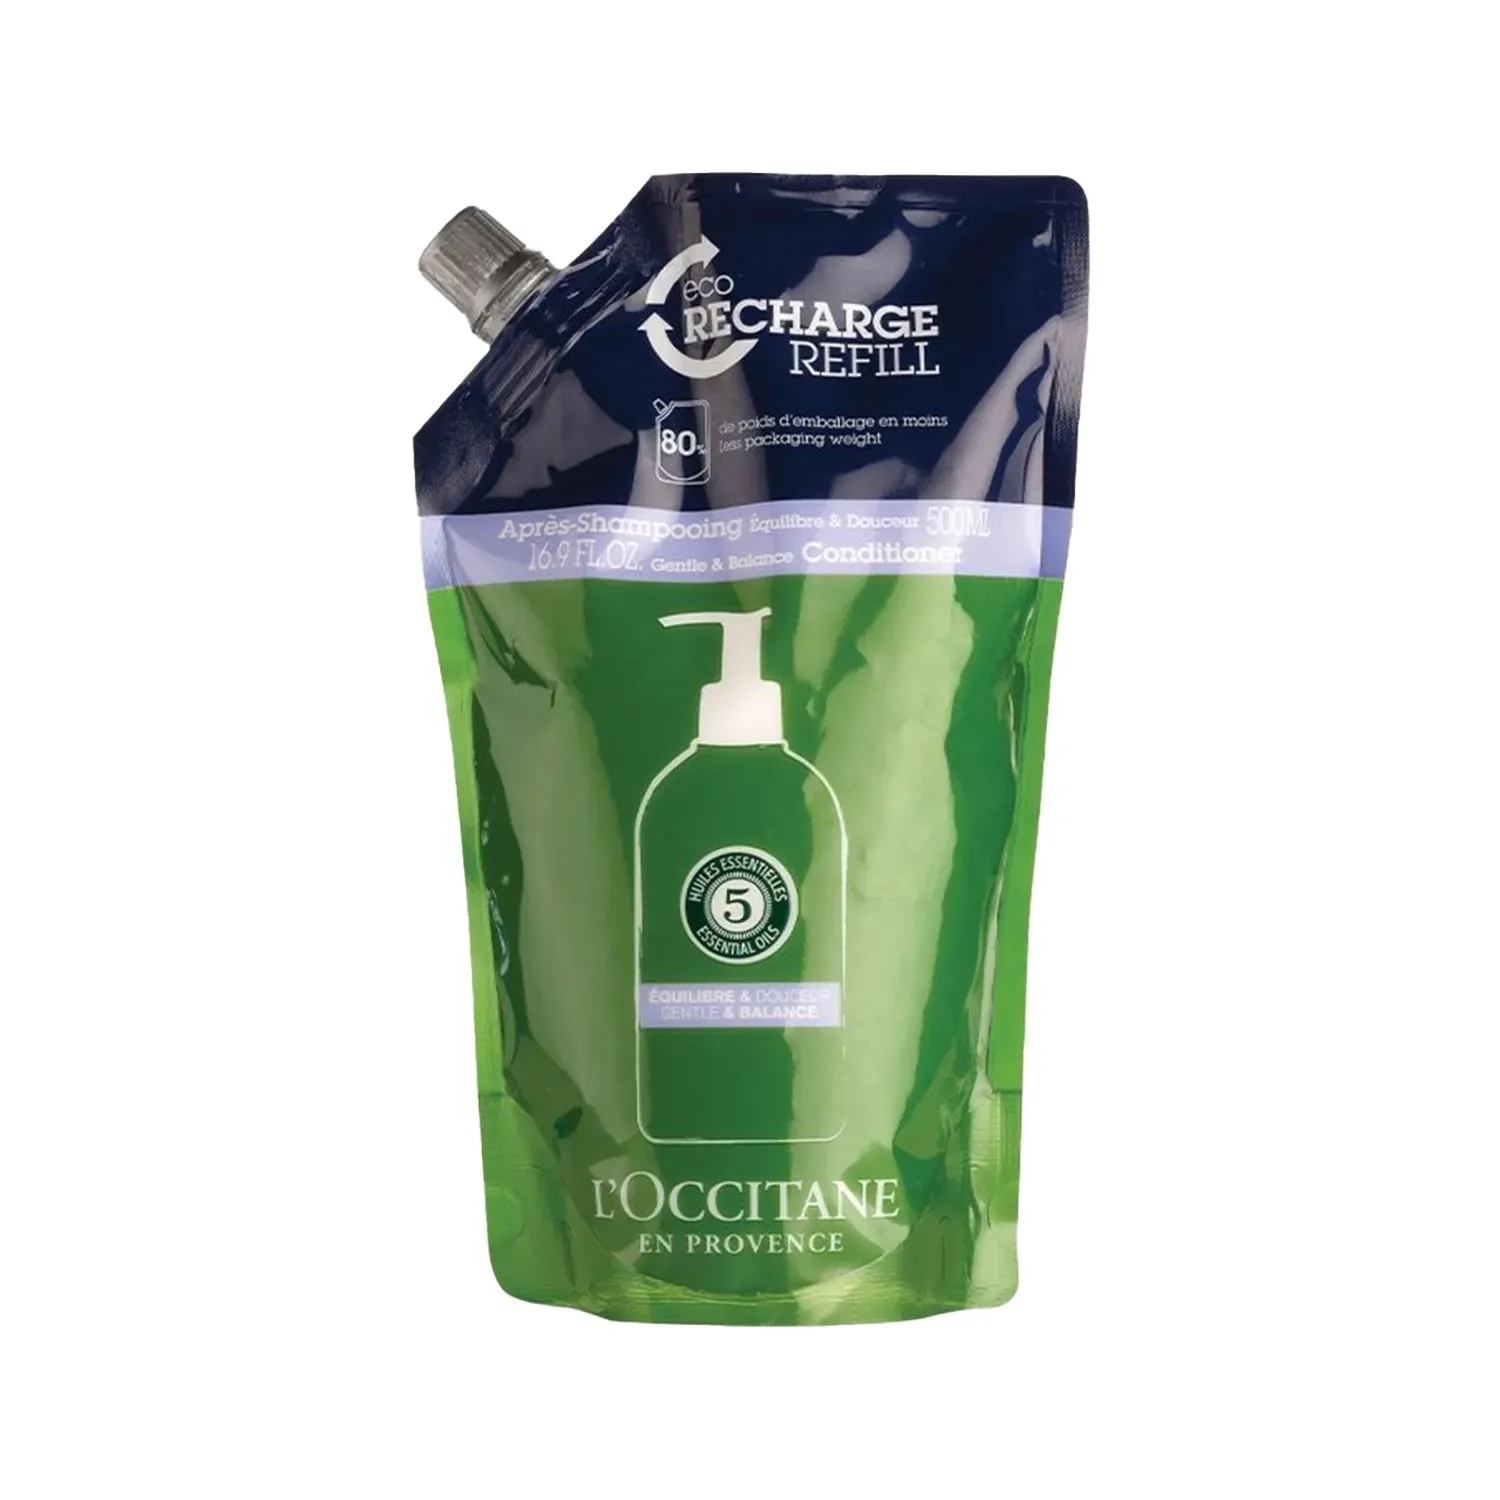 L'occitane | L'Occitane  EN Provence Gentle & Balance Shampooing Conditioner Eco Recharge Refill (500ml)